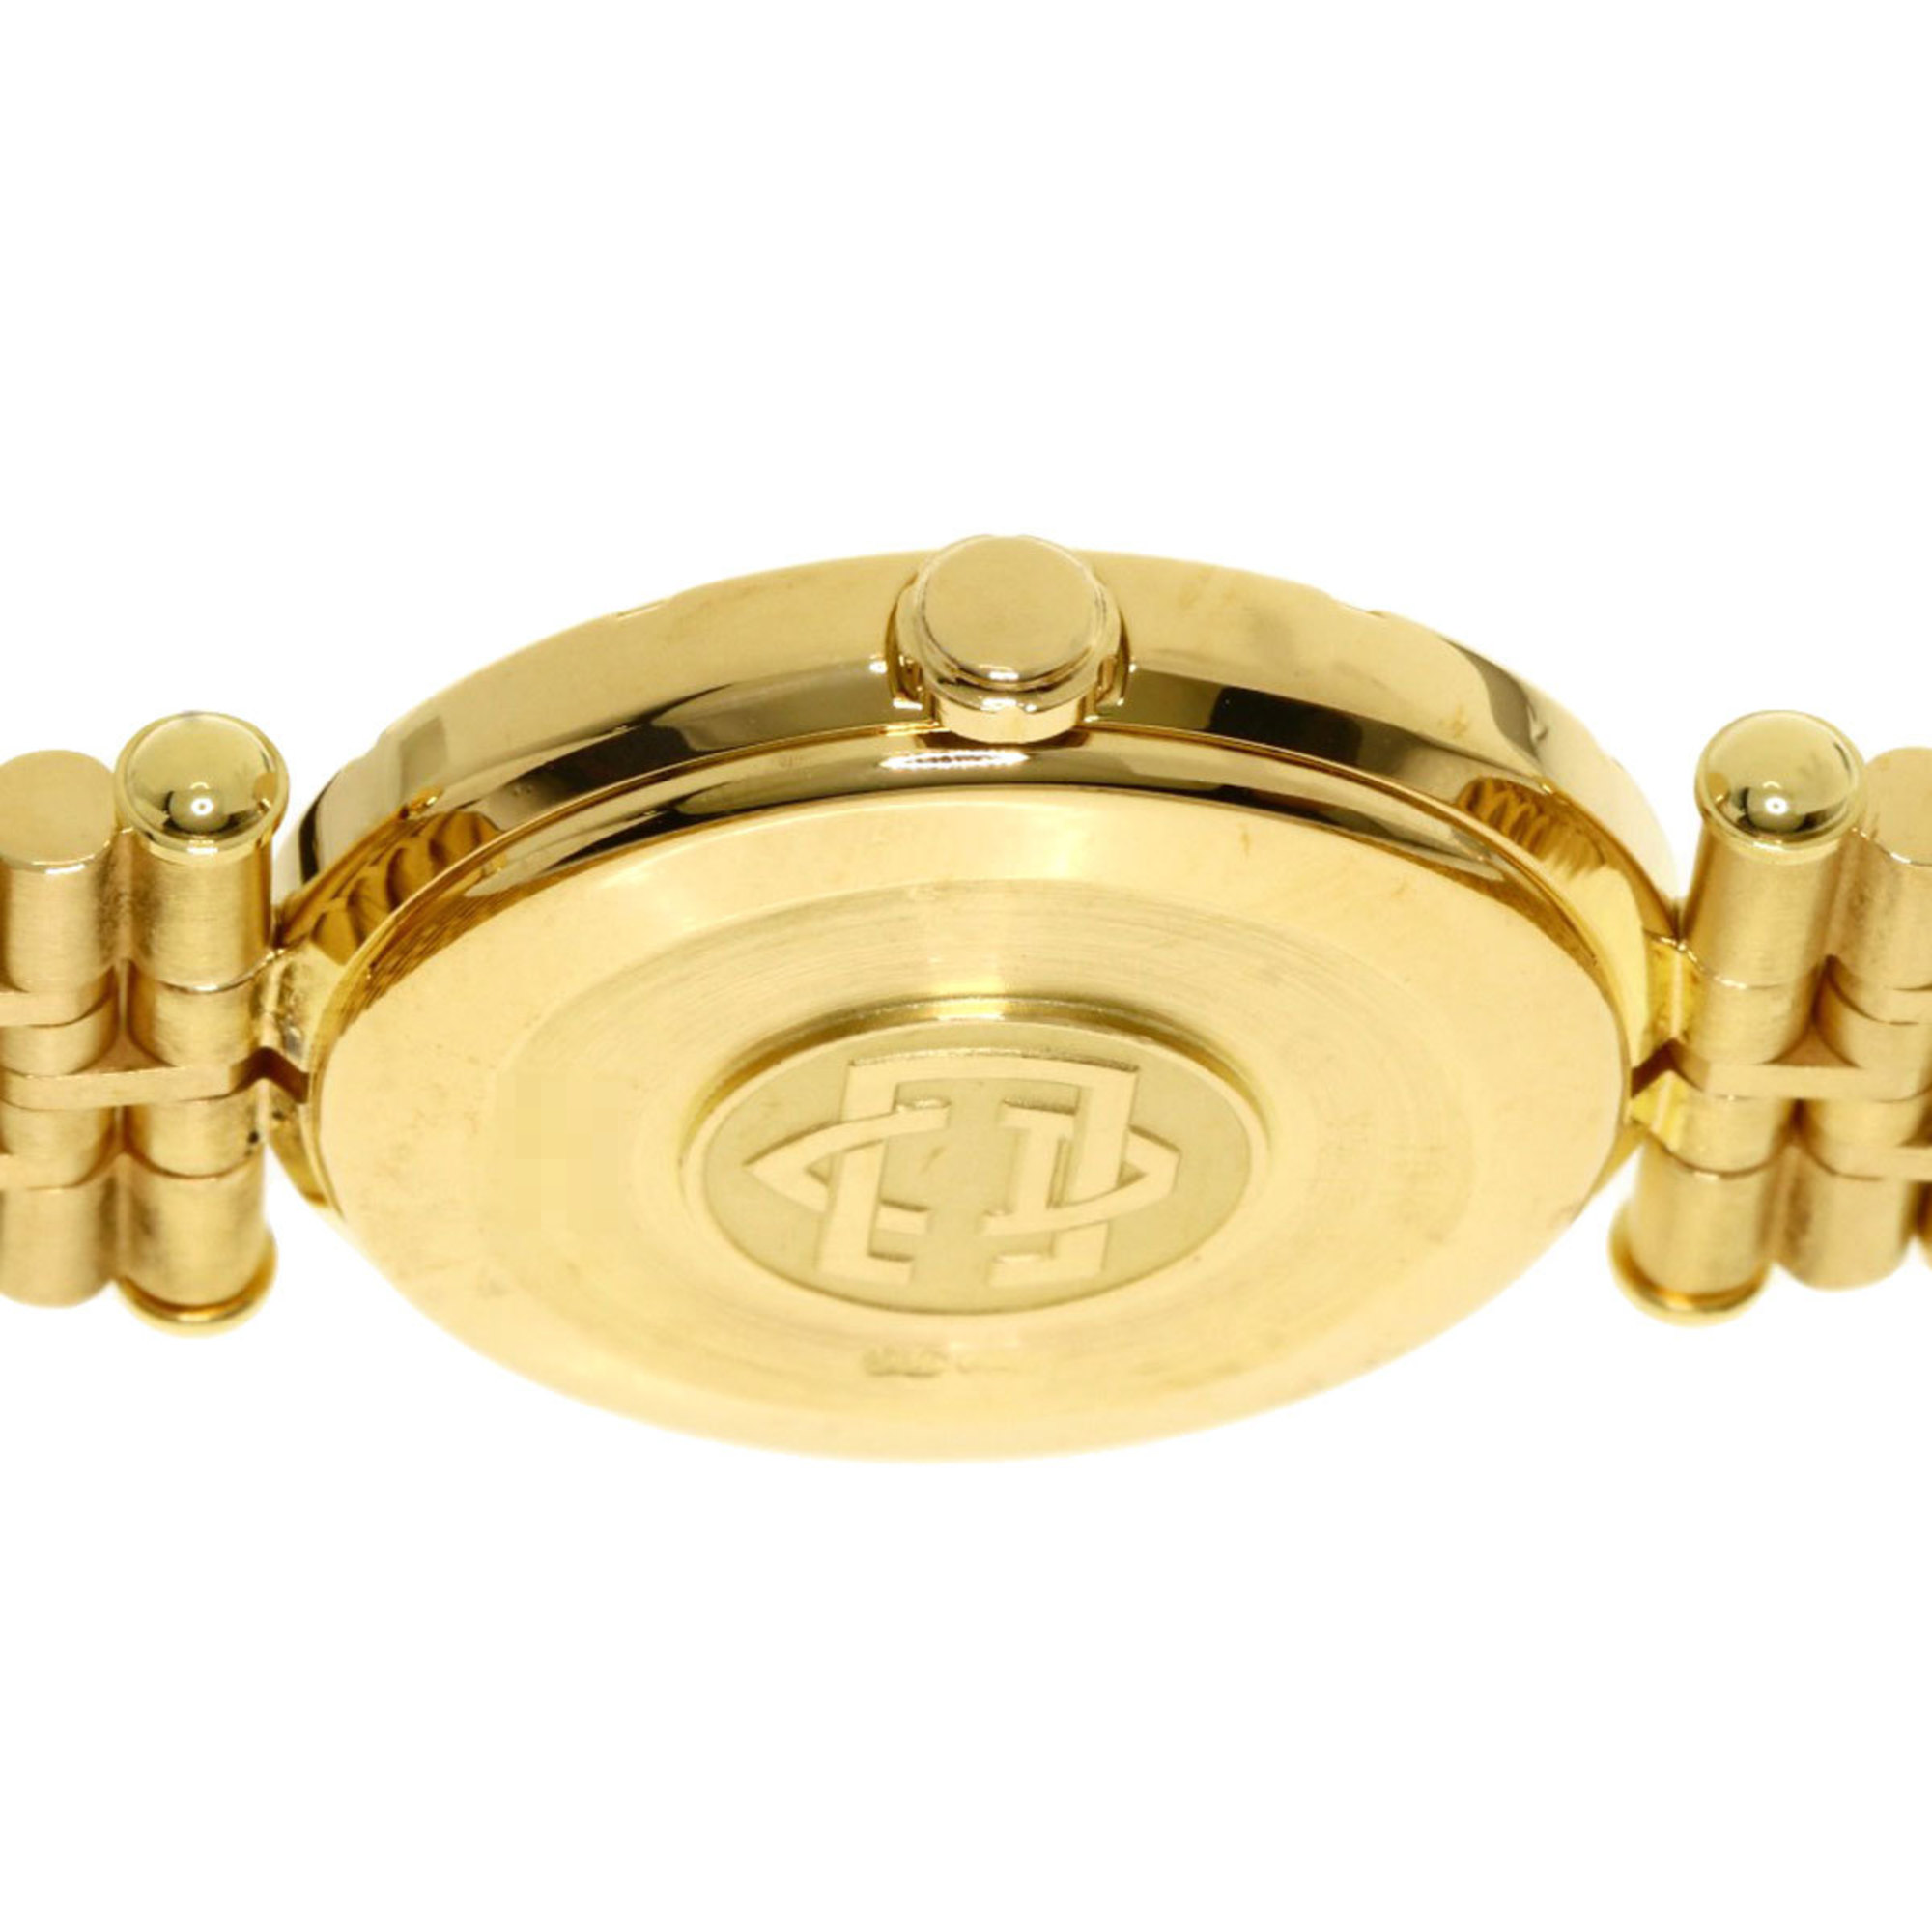 Van Cleef & Arpels Classic Wrist Watch K18 Yellow Gold / k18YG Ladies